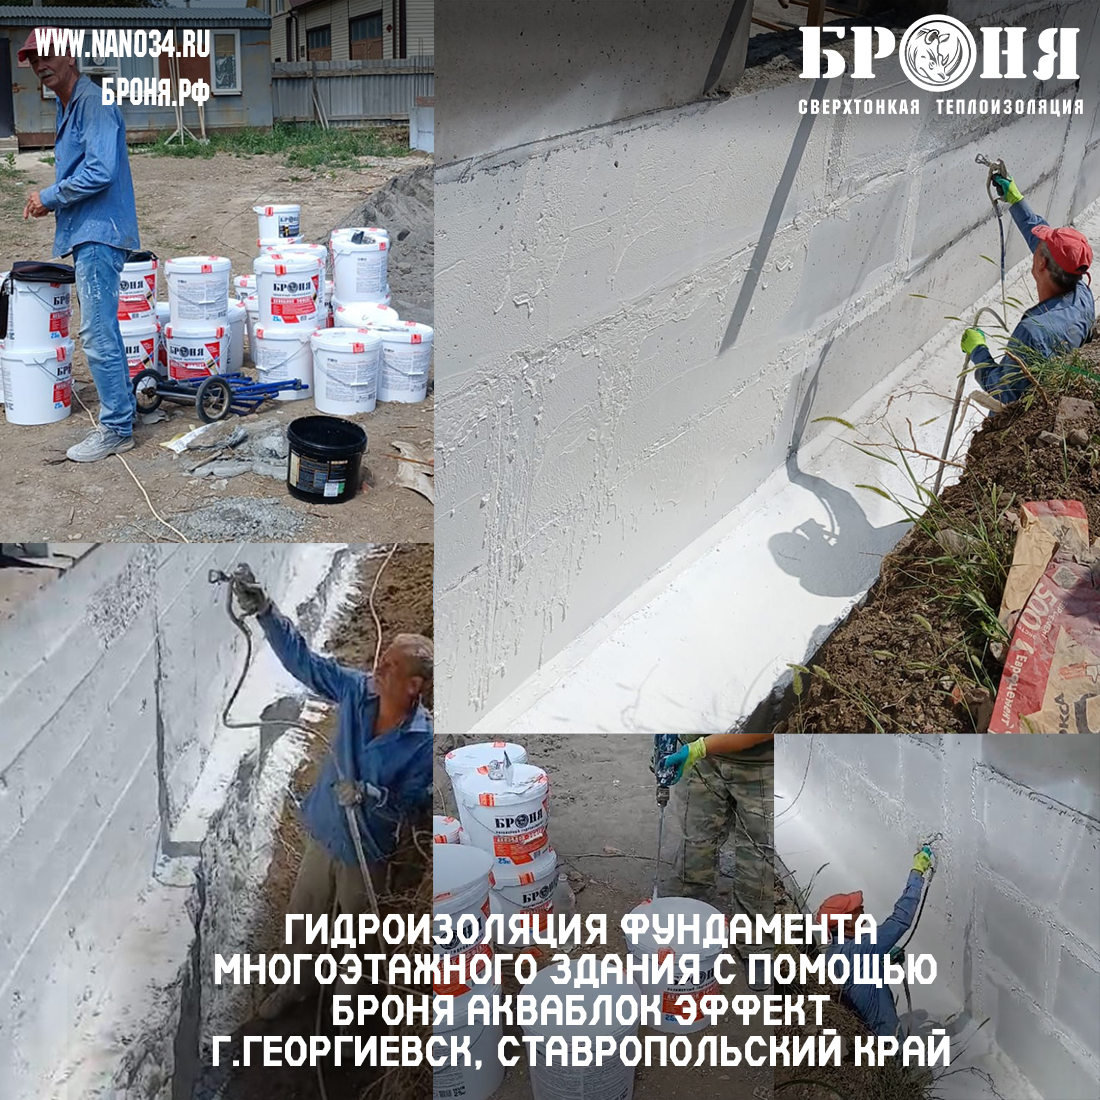 Waterproofing the foundation of a multi-storey building applying Bronya AquaBlock Effect, Georgievsk, Stavropol Territory (photo and video)